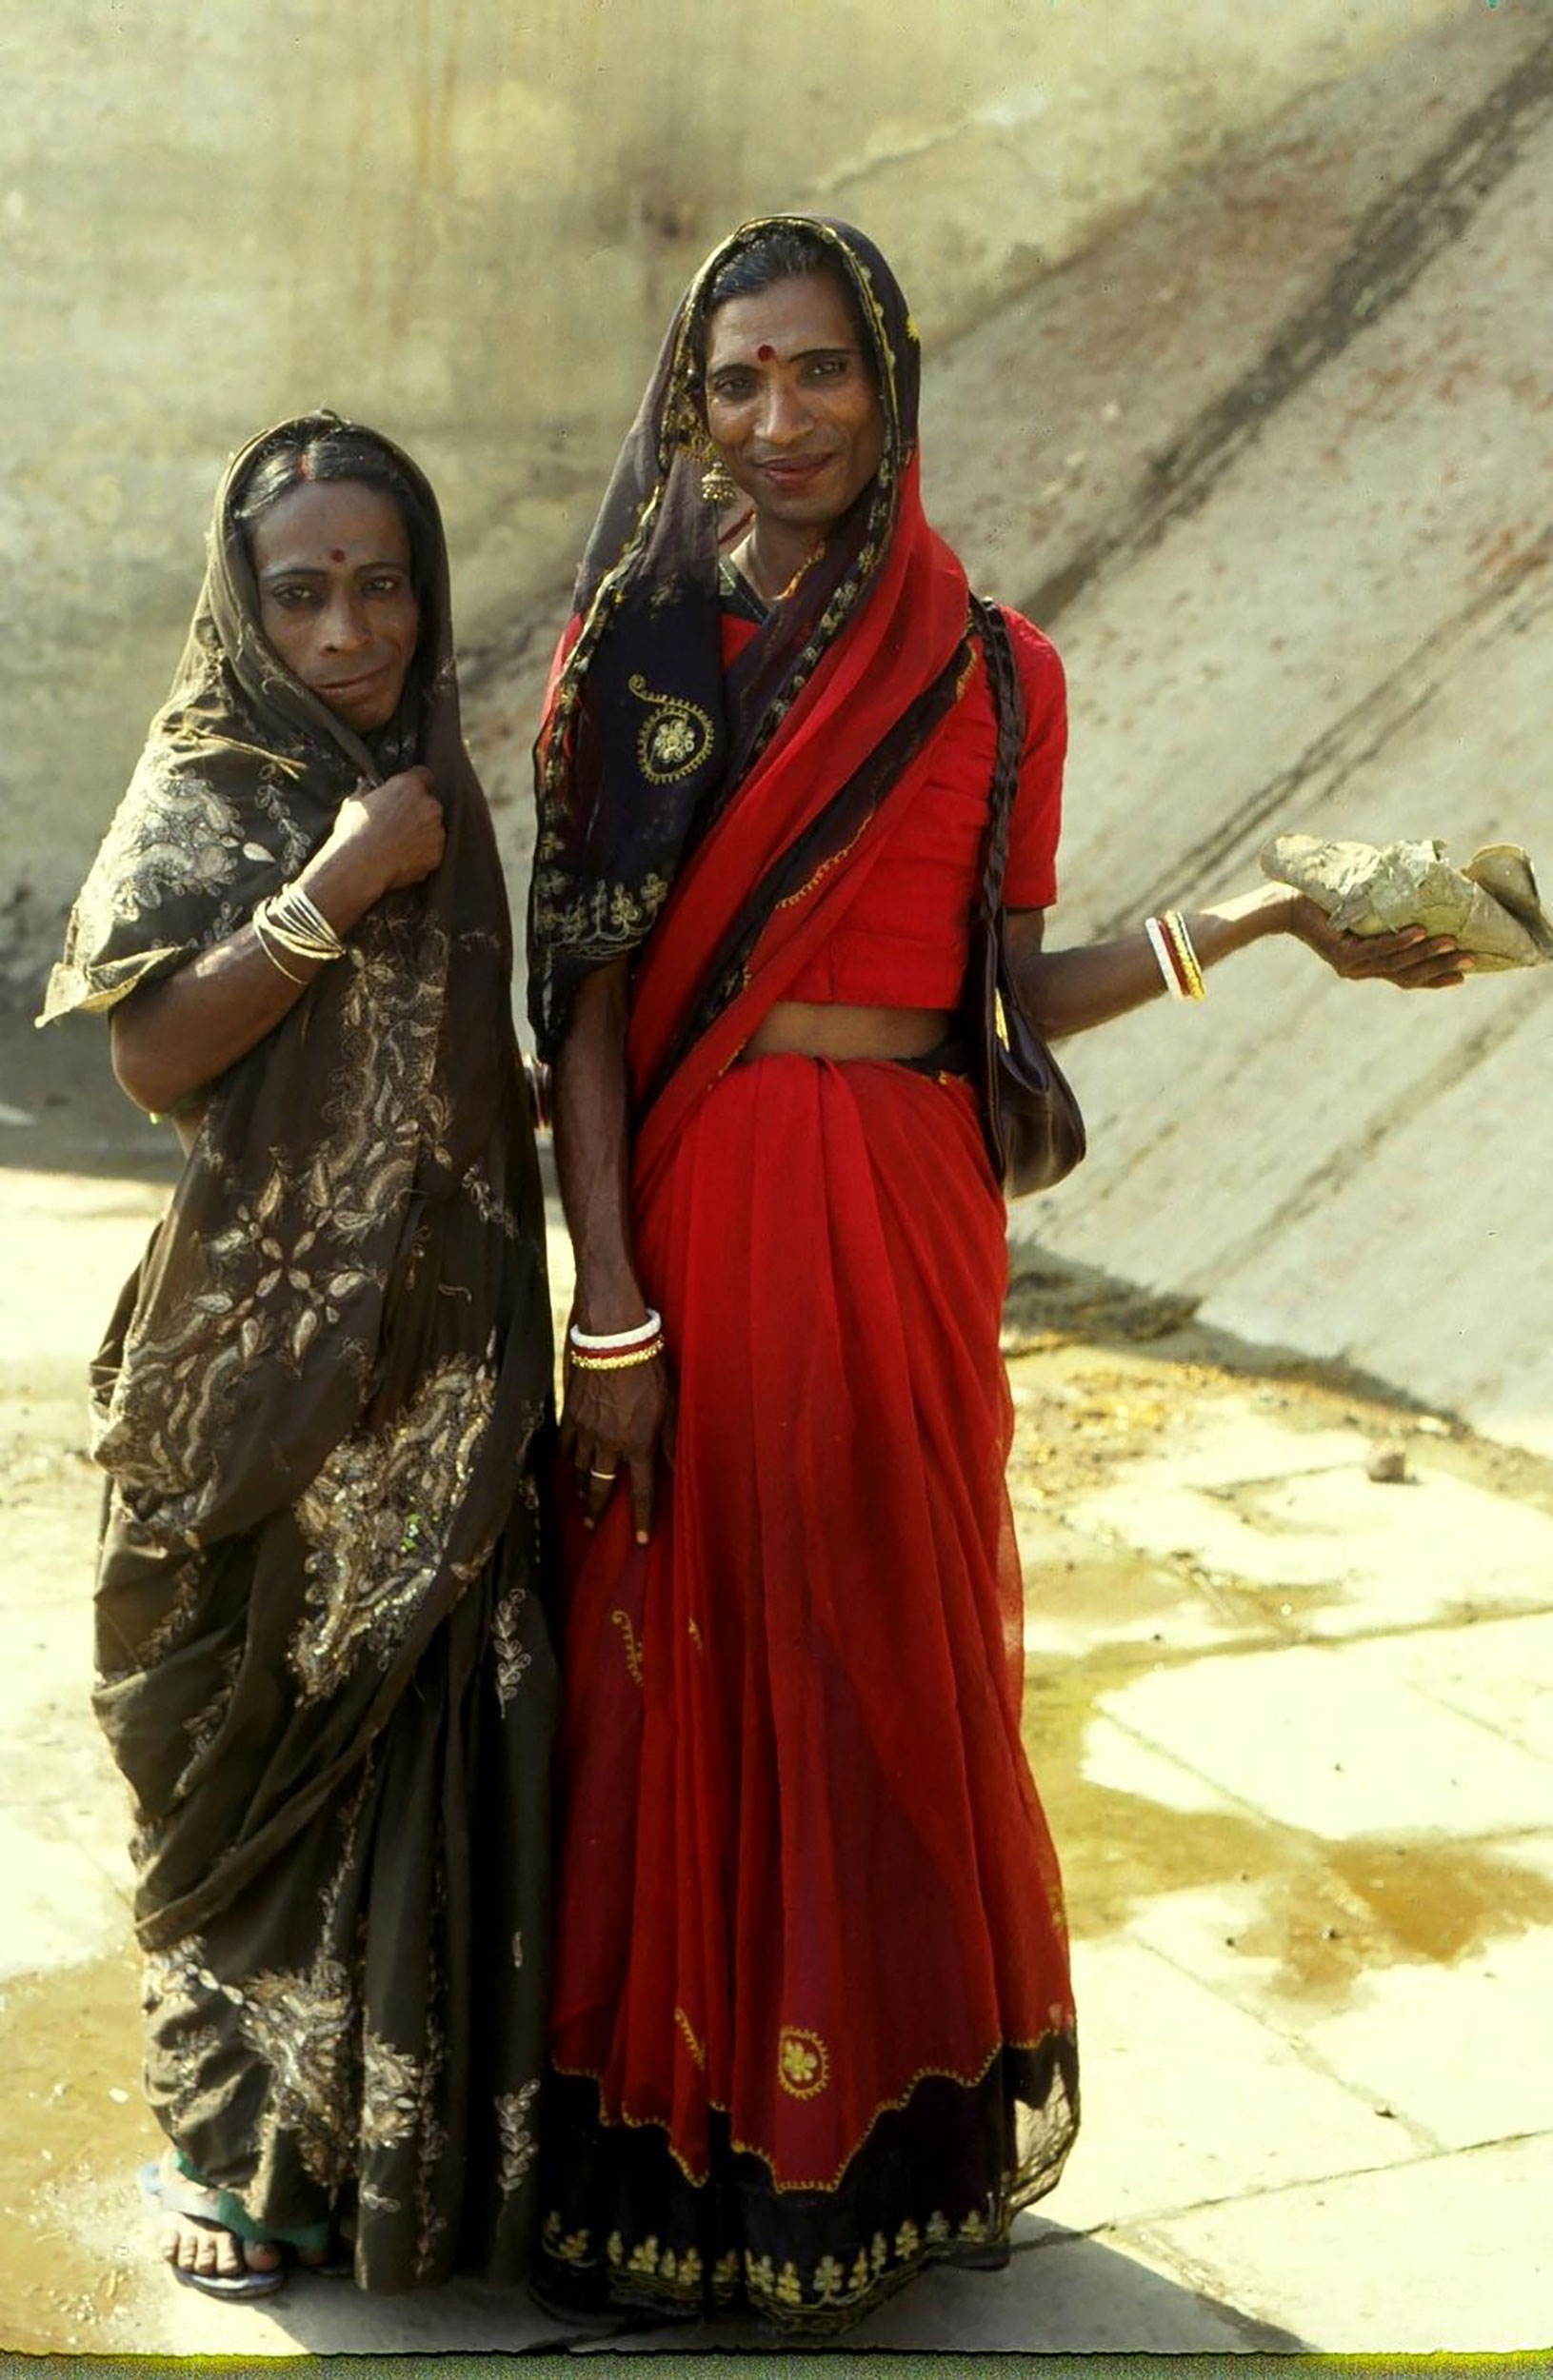 Two Transvestites/Varanasi, India